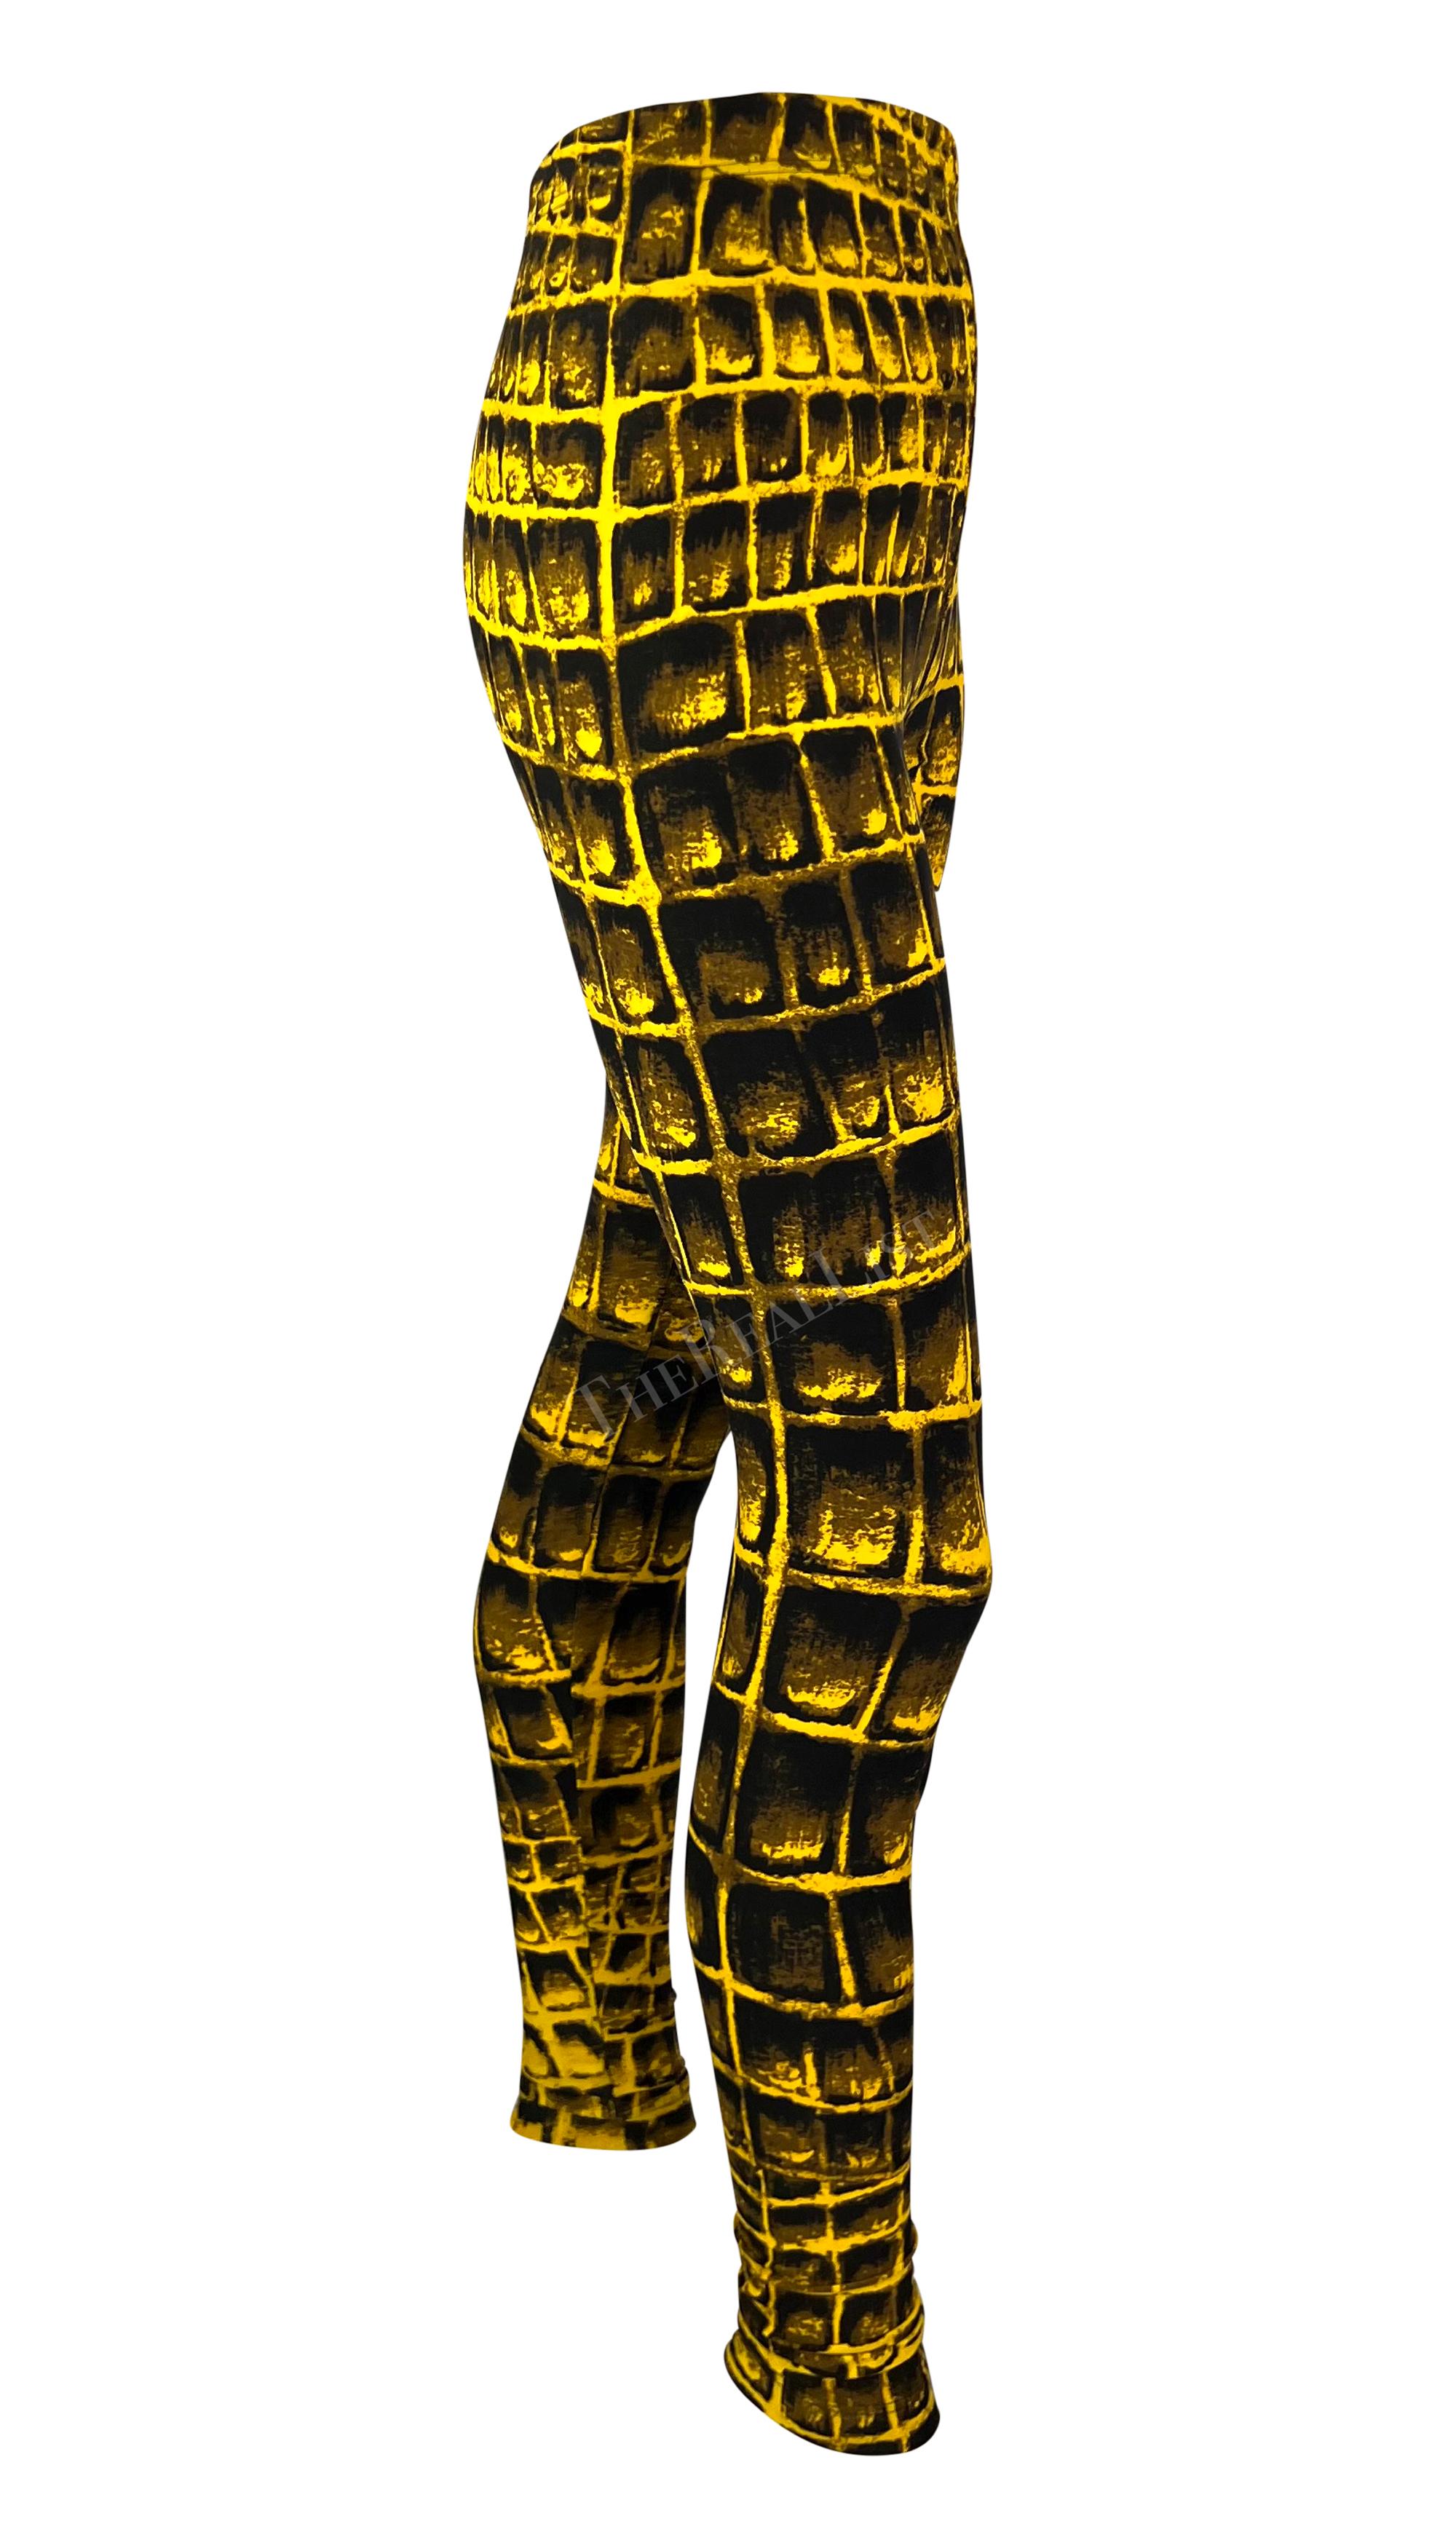 S/S 1992 Gianni Versace Runway Yellow Black Crocodile Print Leggings Tights For Sale 8